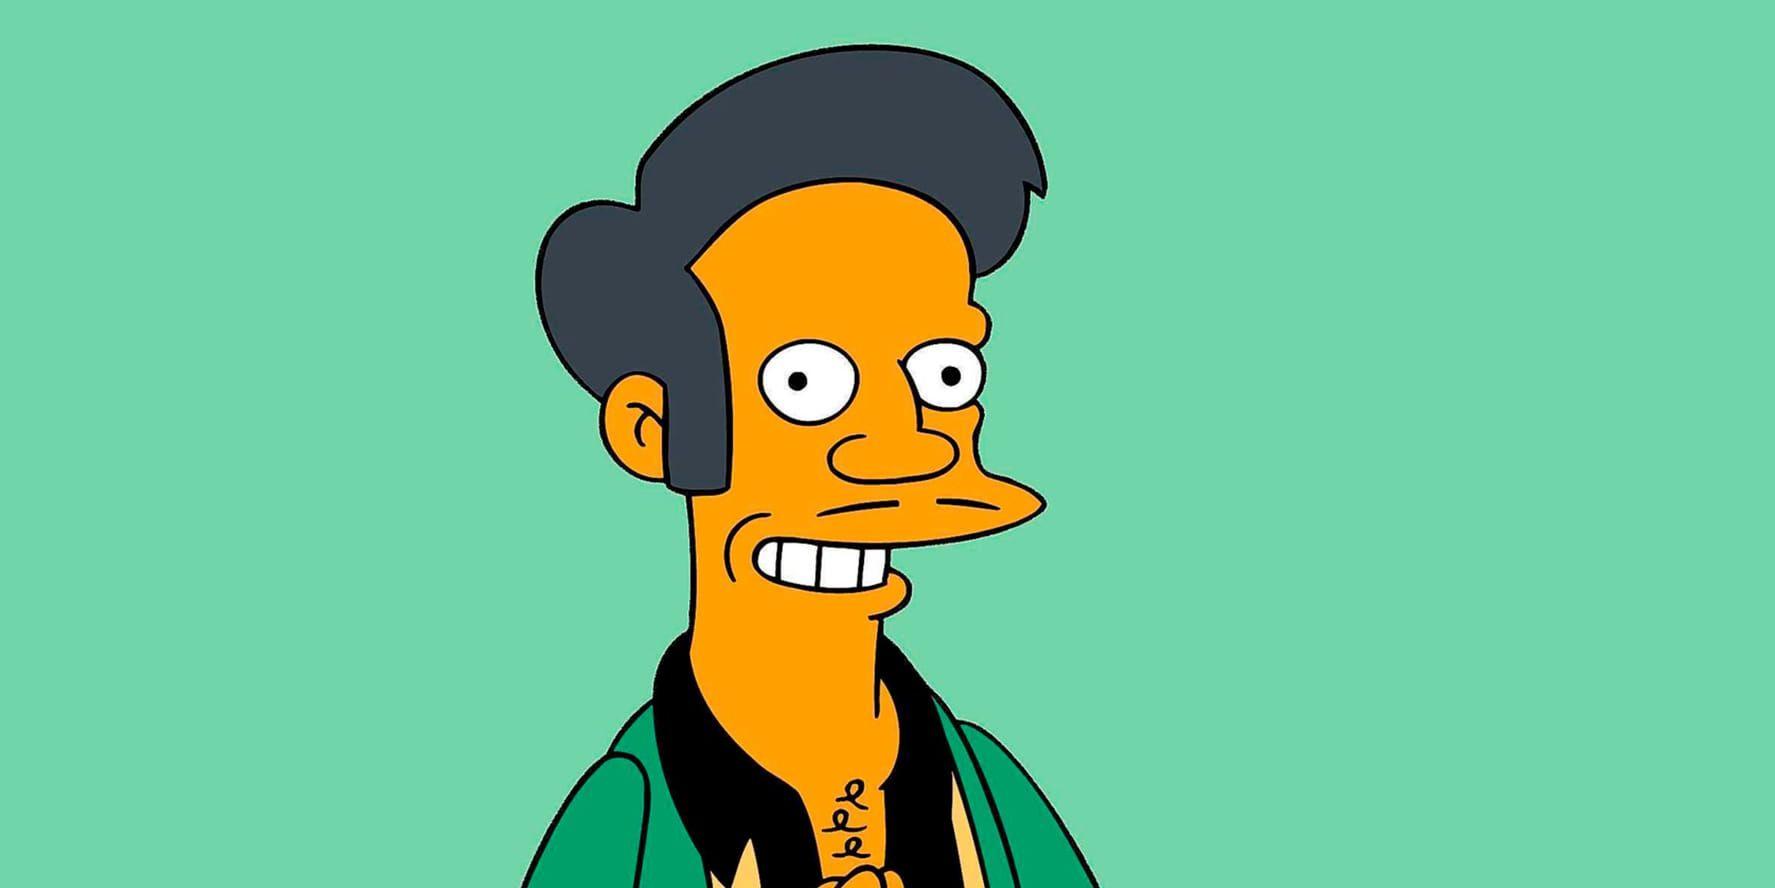 Den indiske butiksägaren Apu i "The Simpsons". Arkivbild.